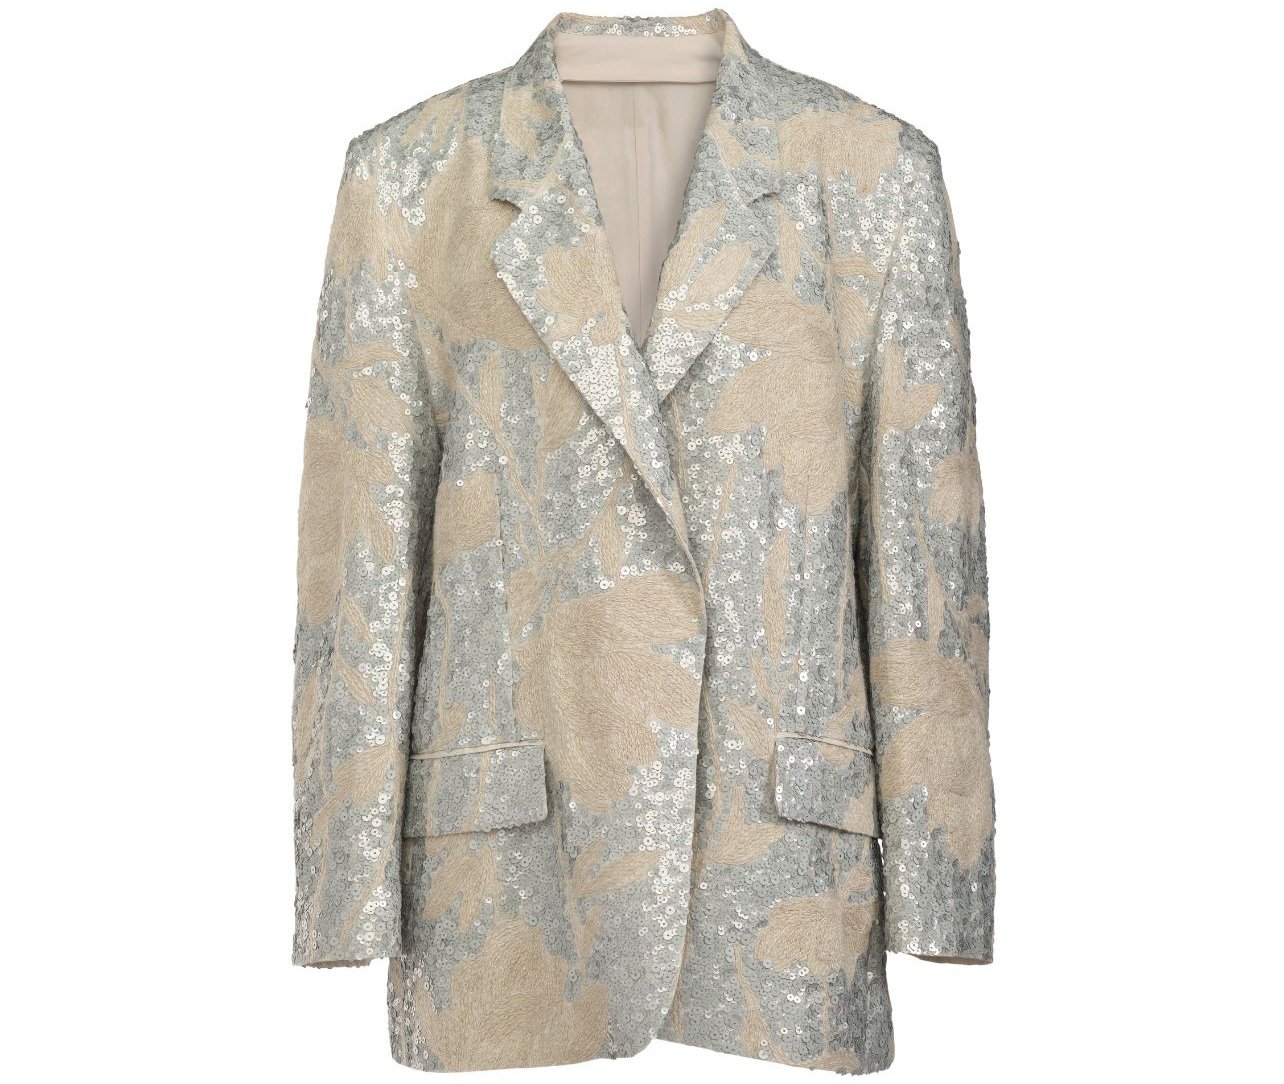 Brunello Cucinelli blazer in cream with silver metallic sequins and embroidering